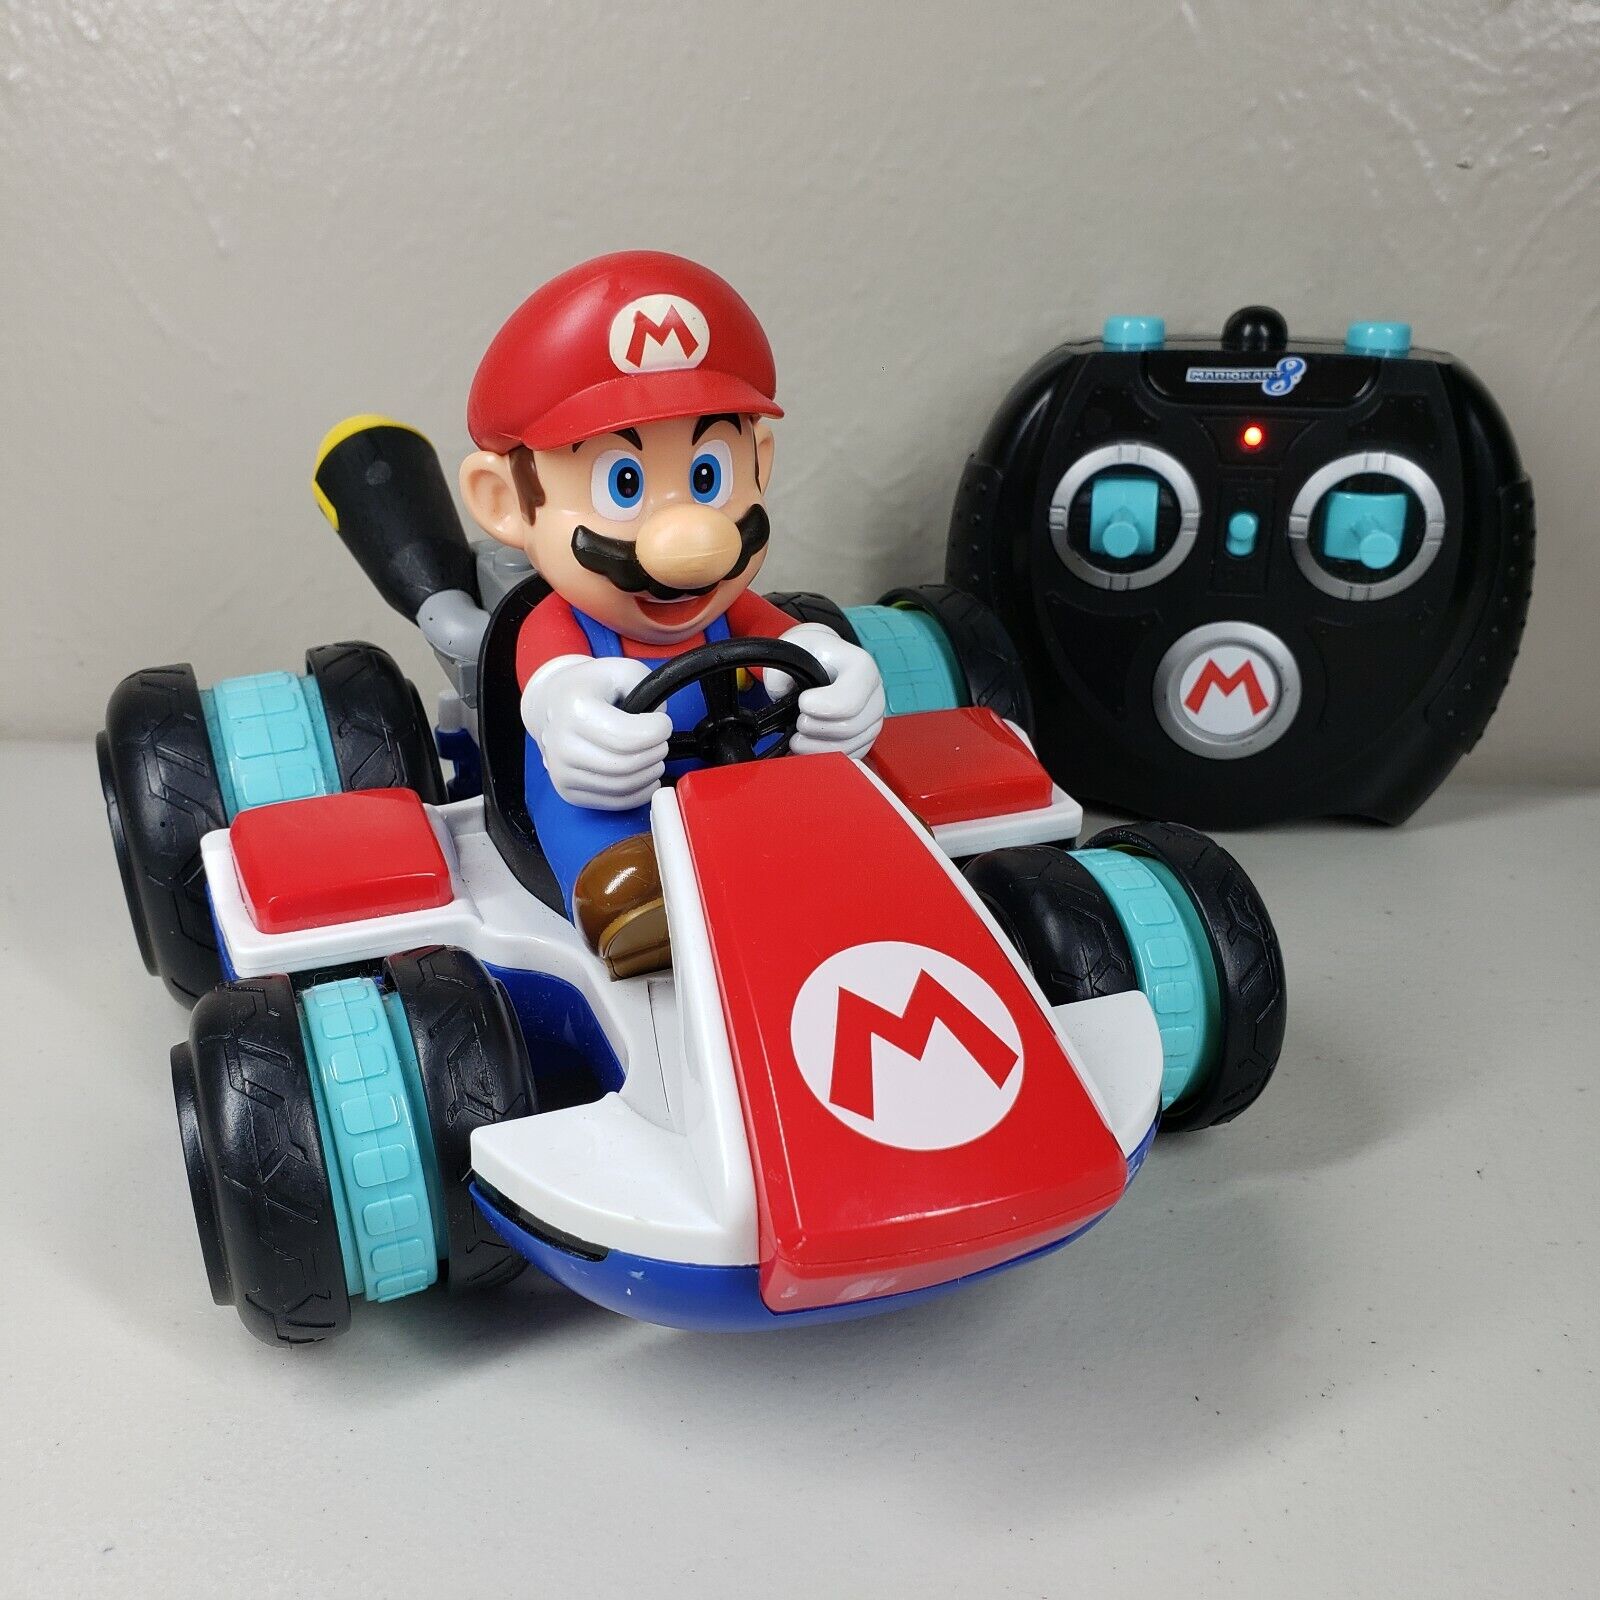 Nintendo Mario Kart 8 RC Racer Jakks Pacific 2016 Mario Car Color Red White Blue